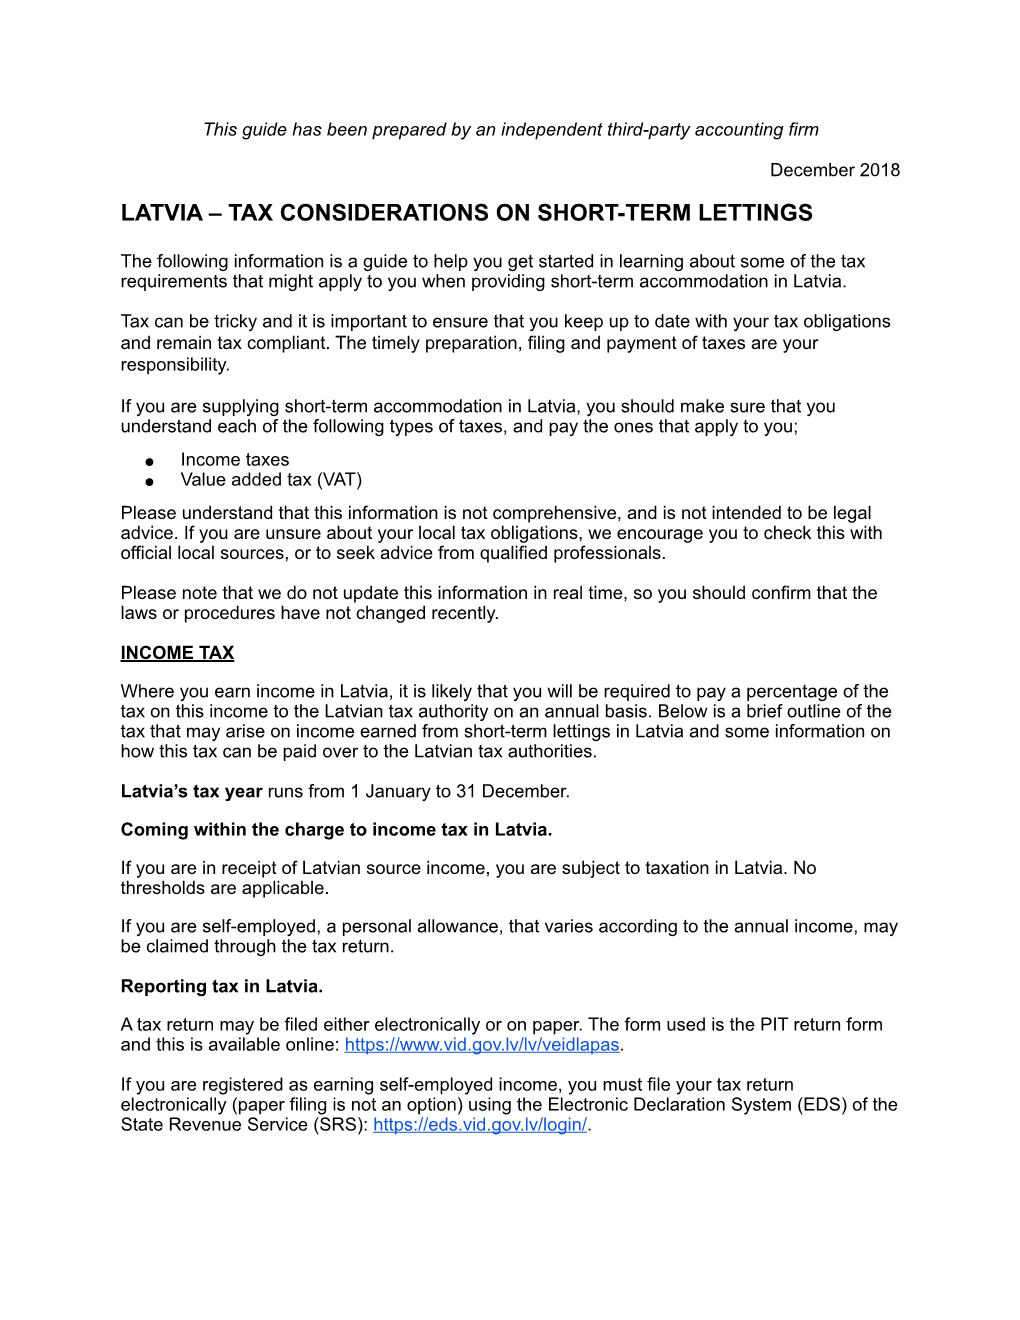 Latvia – Tax Considerations on Short-Term Lettings